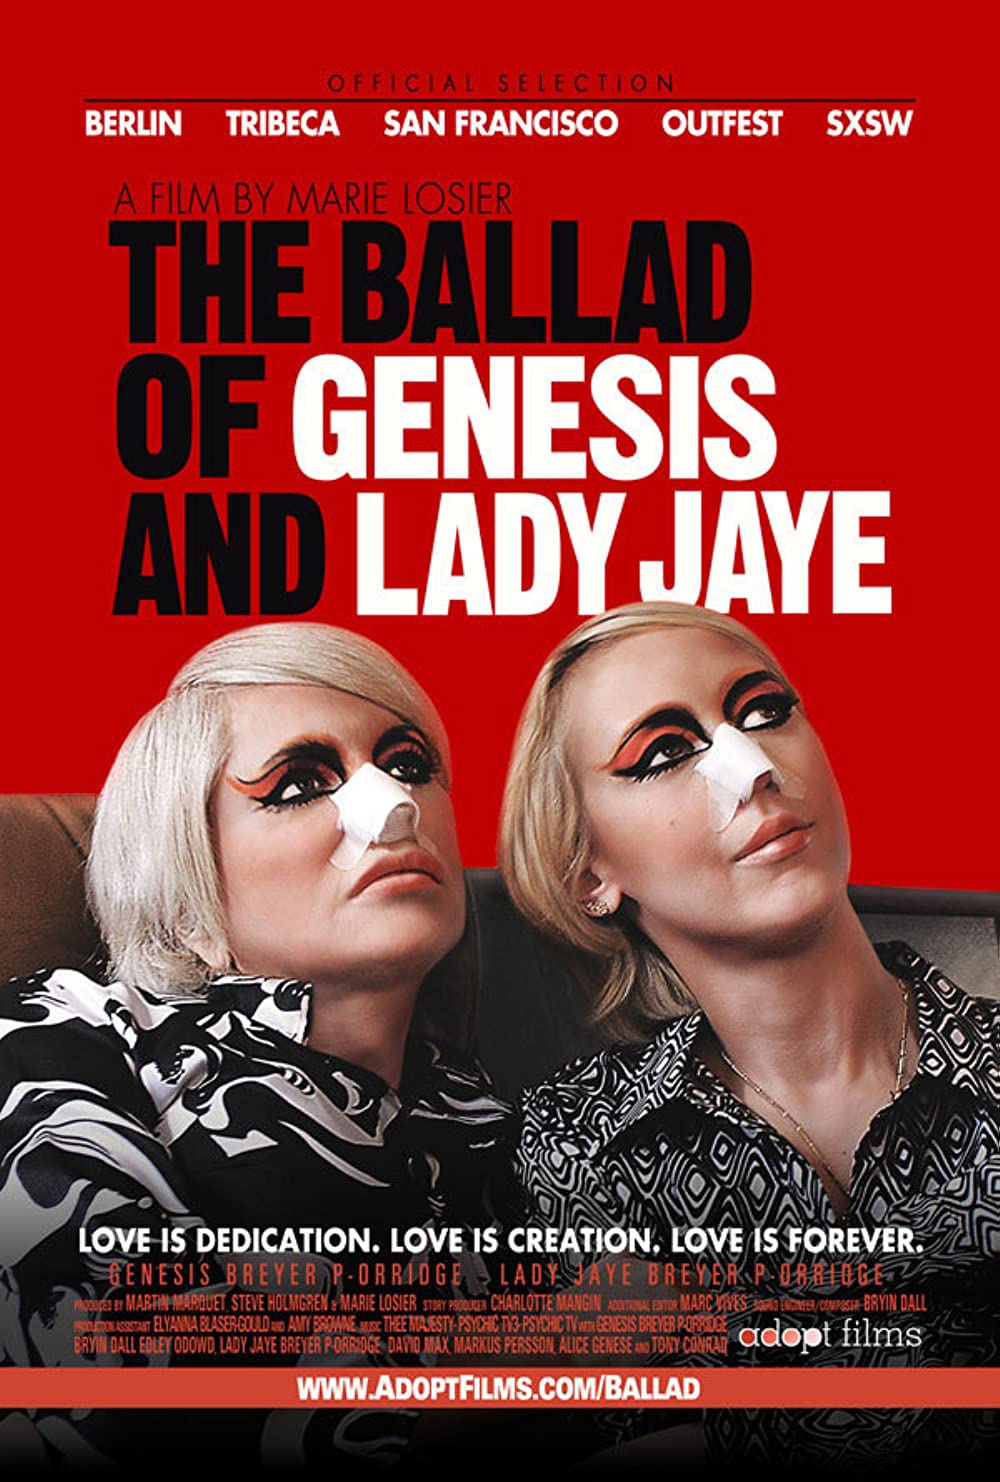 Filmbeschreibung zu The Ballad of Genesis and Lady Jaye